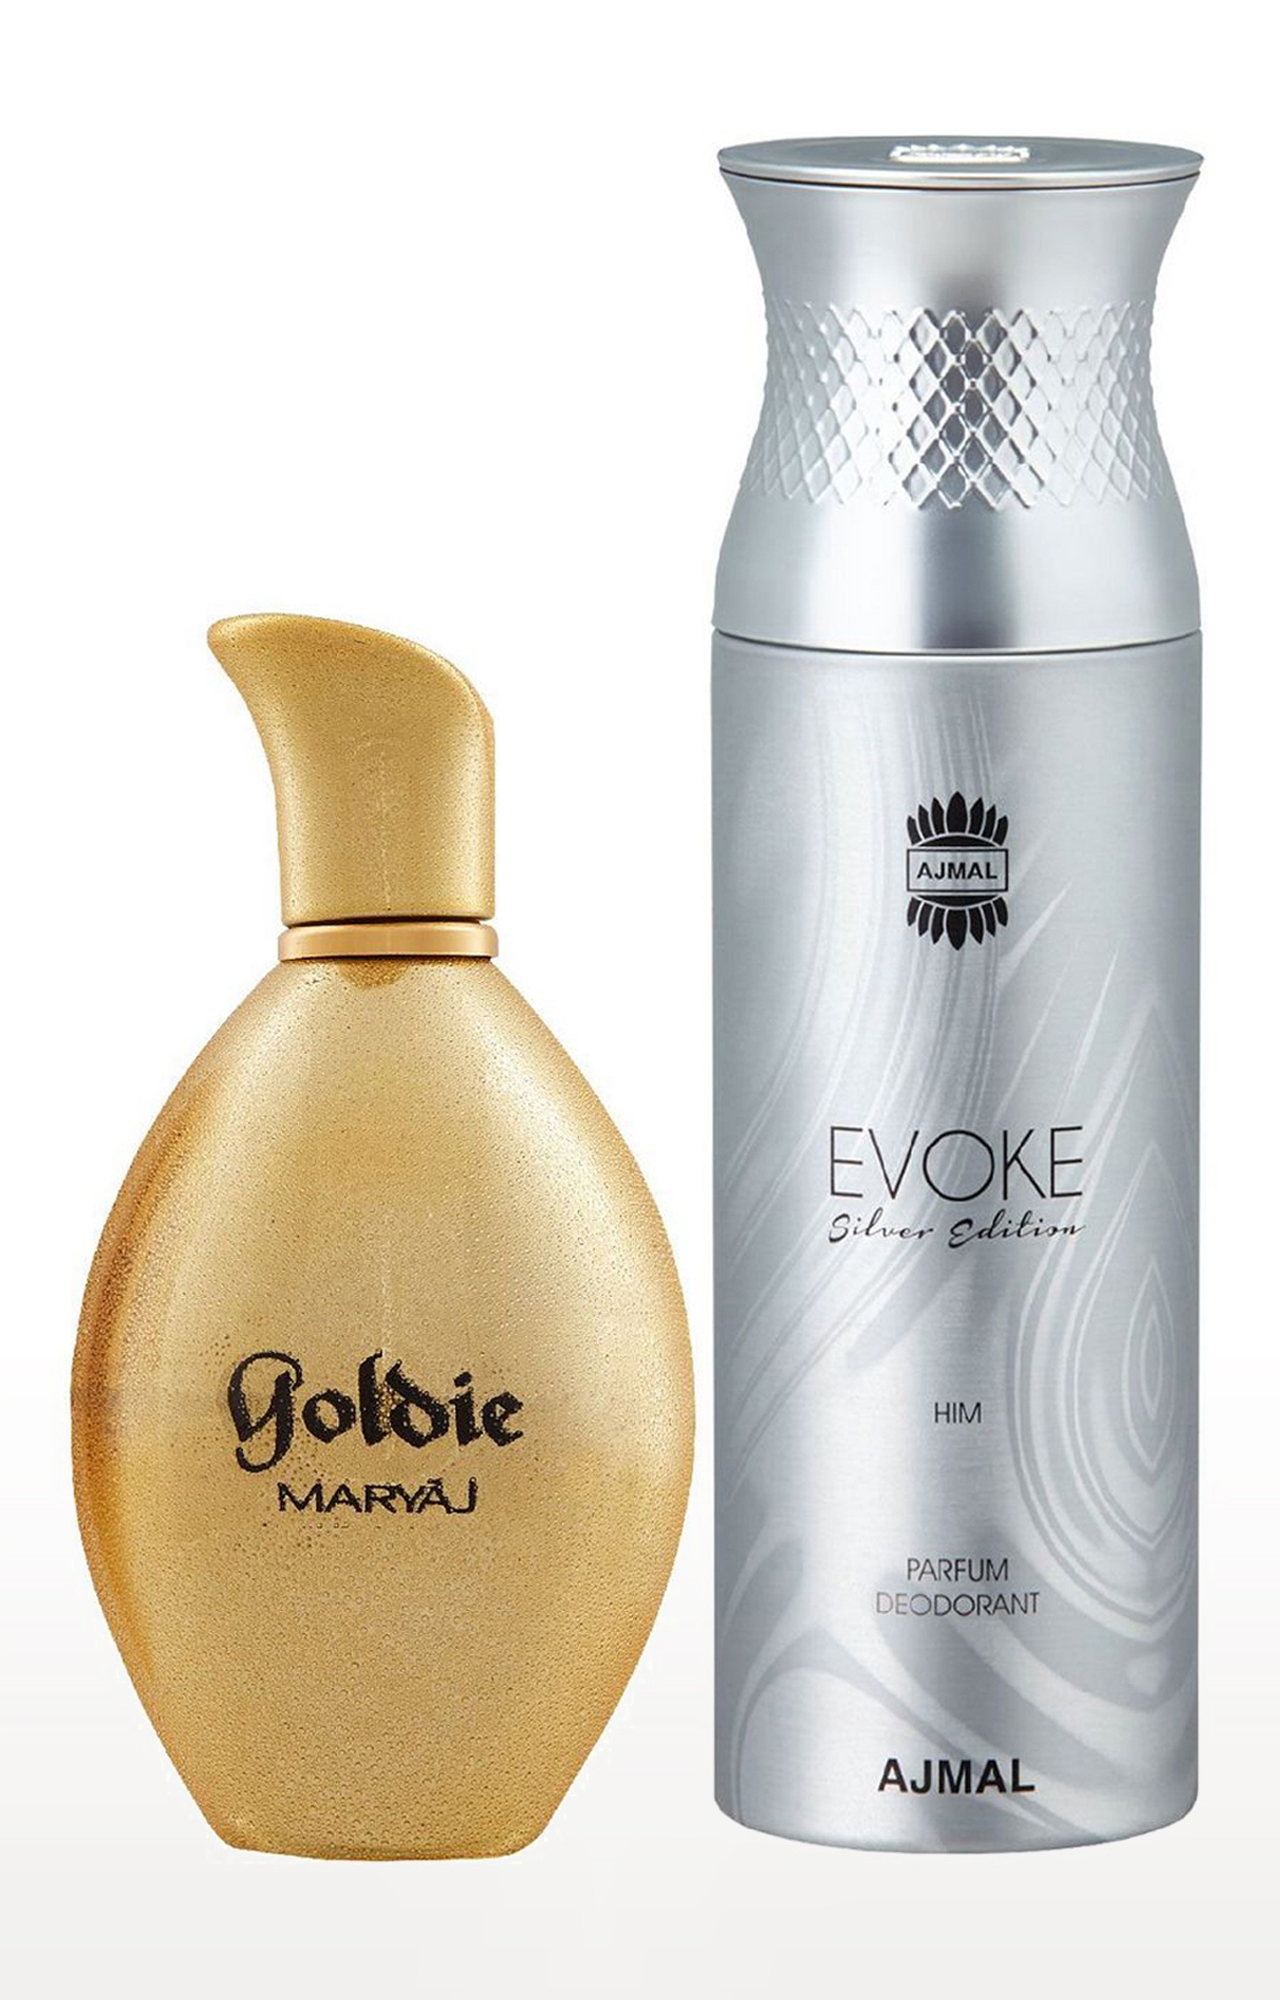 Ajmal | Maryaj Goldie Eau De Parfum Fruity Perfume 100ml for Women and Ajmal Evoke Silver Edition Him Deodorant Fragrance 200ml for Men